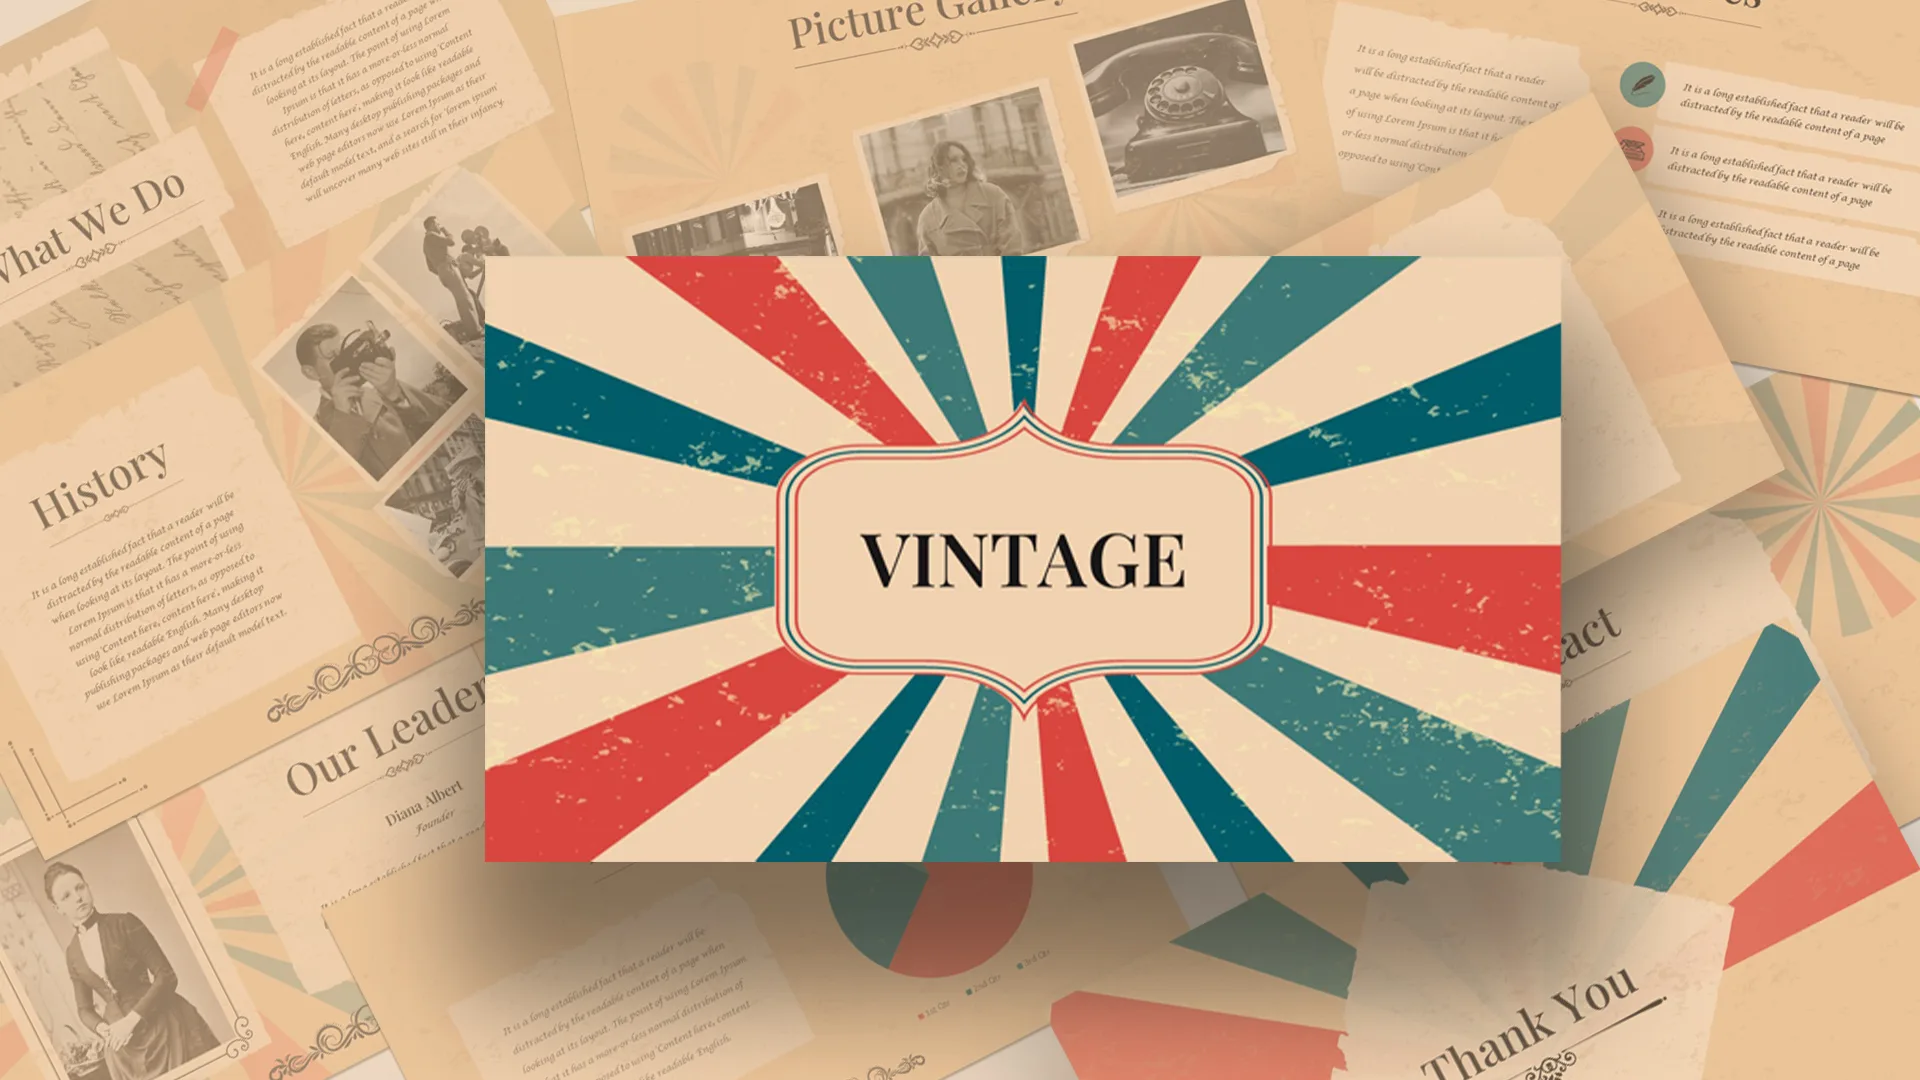 Free Vintage Photo Album Theme for PowerPoint and Google Slides